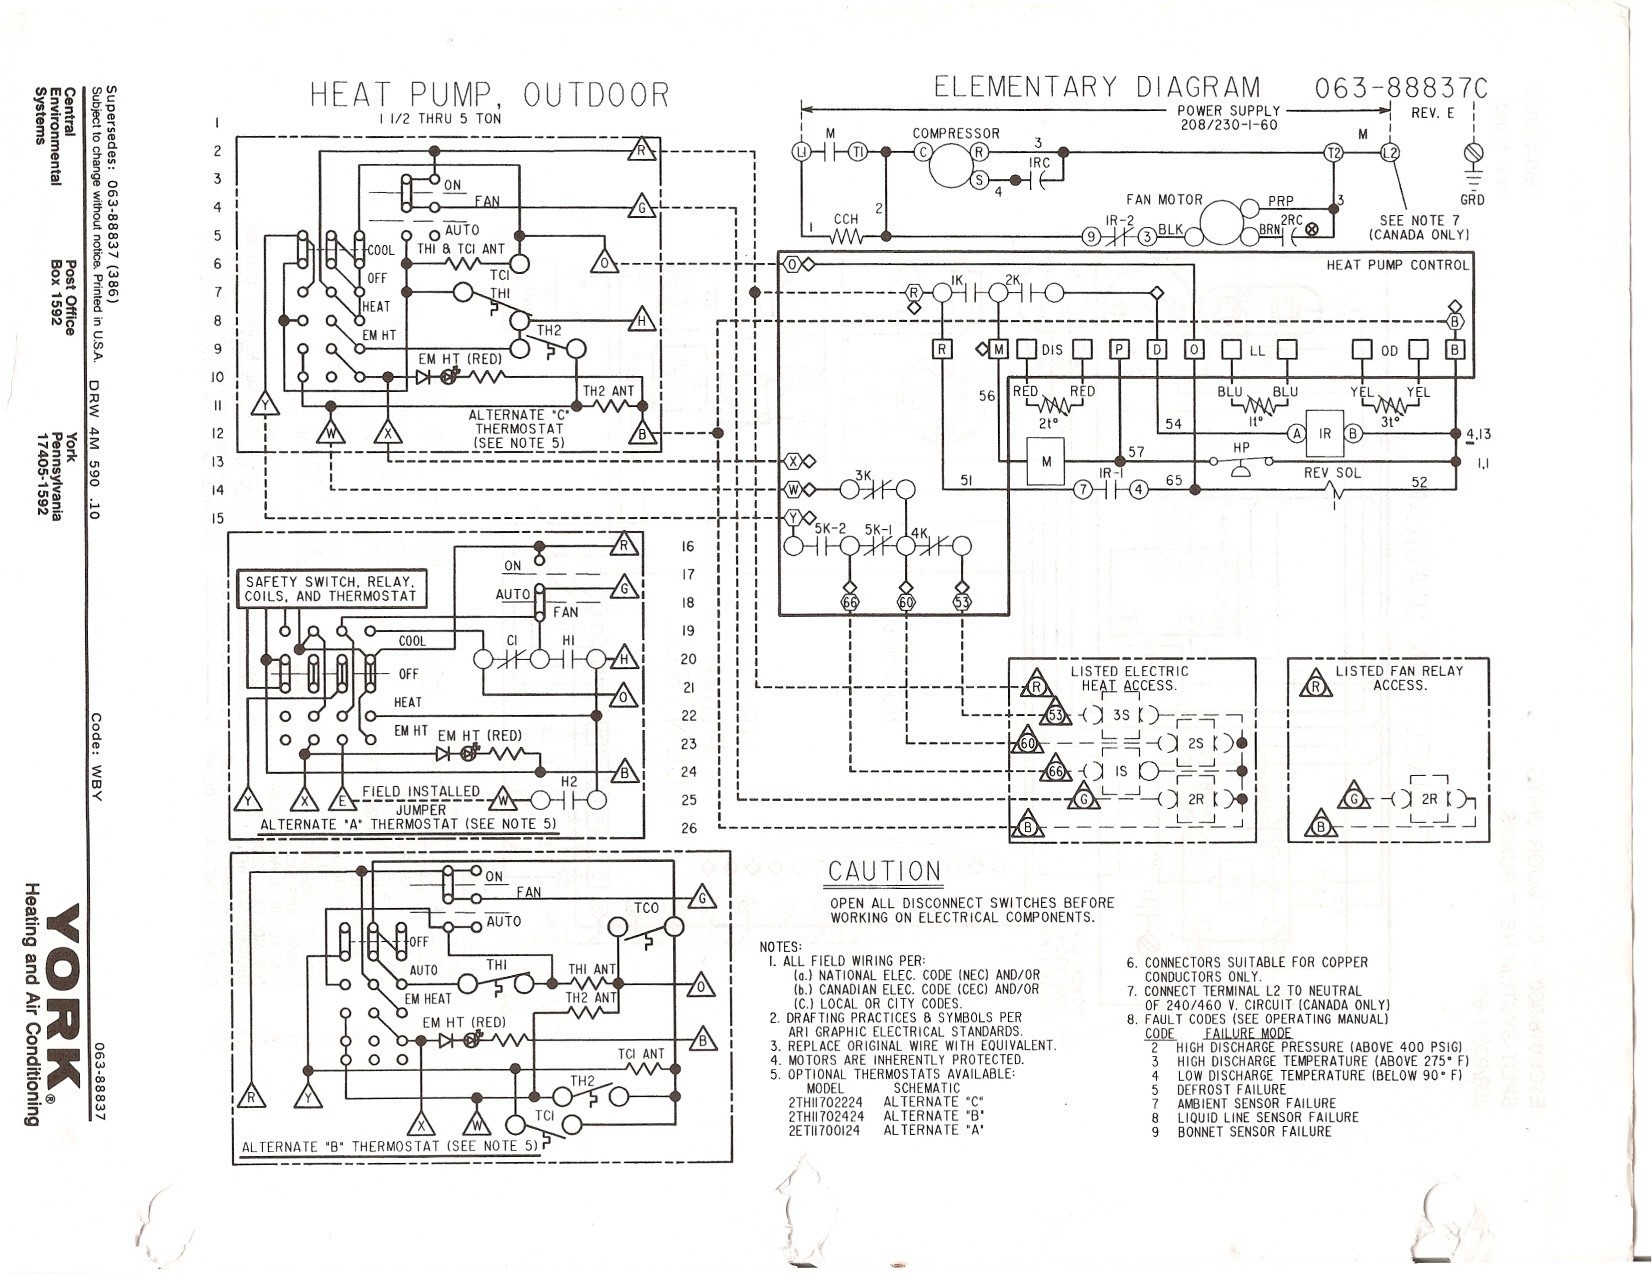 Bryant Heat Pump Wiring Diagram Hvac Heat Pump Wiring Diagram Another Blog About Wiring Diagram • Of Bryant Heat Pump Wiring Diagram